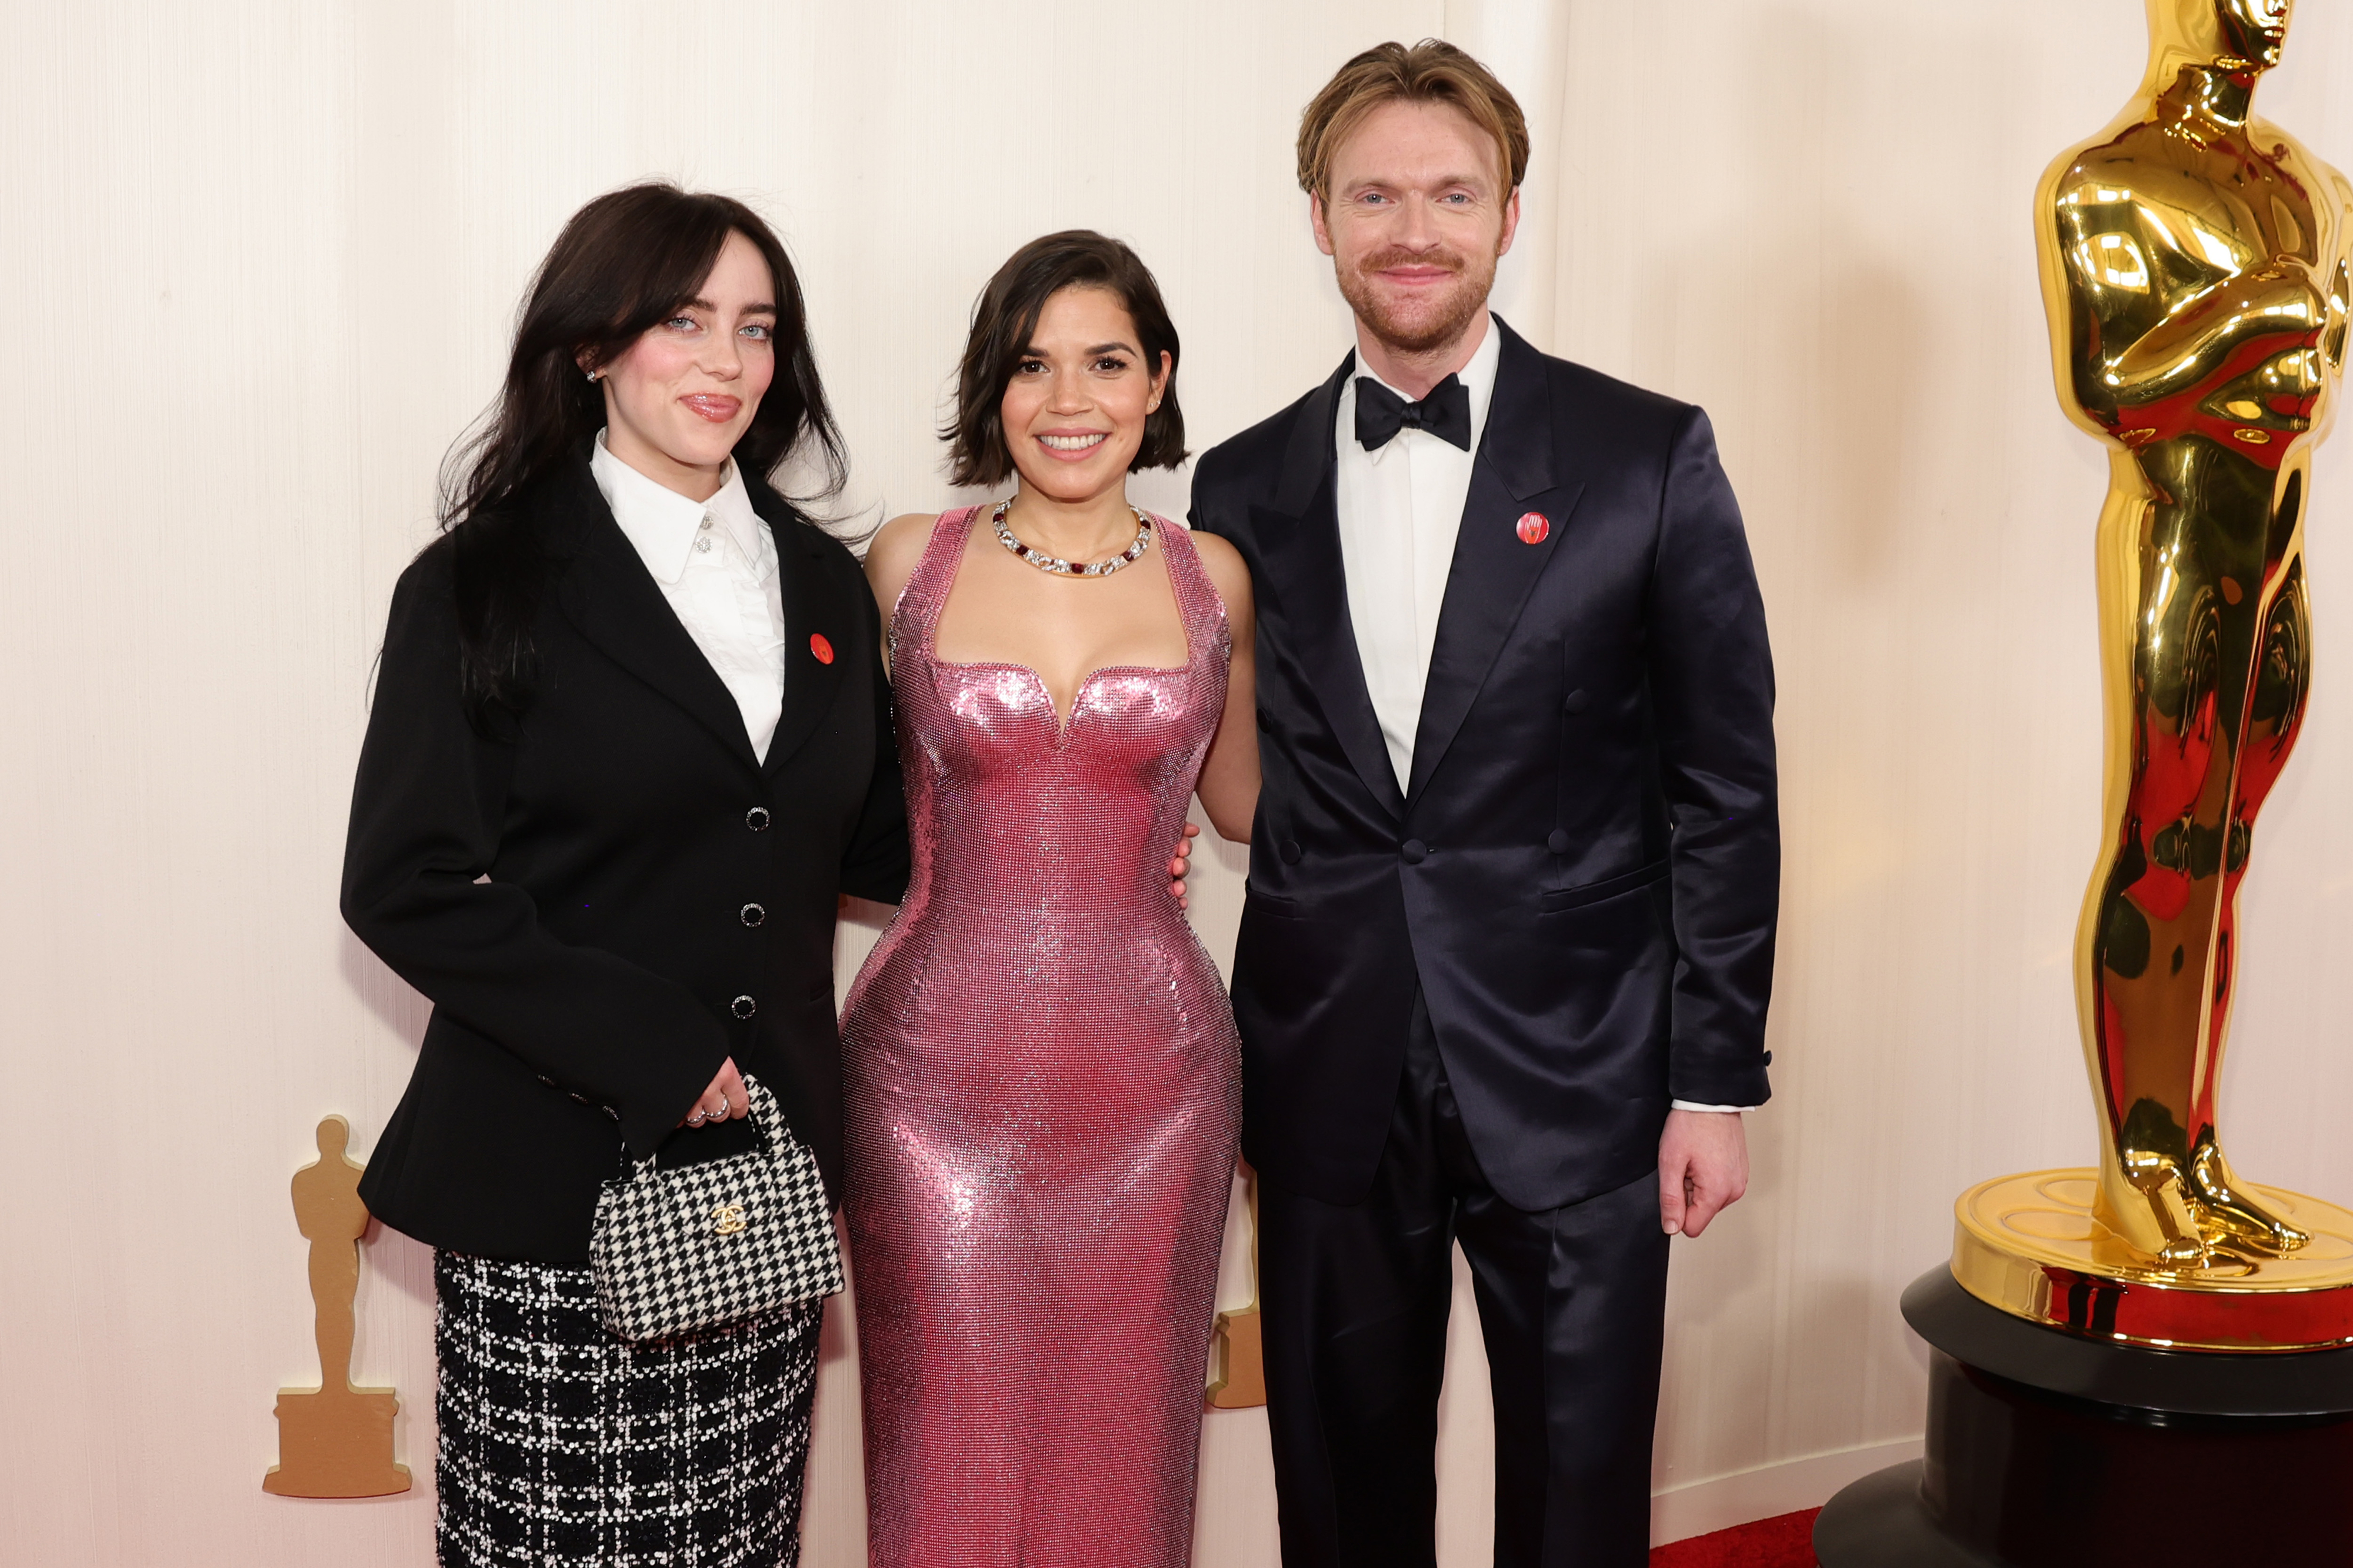 Billie Eilish, America Ferrera, and Finneas at the Oscars